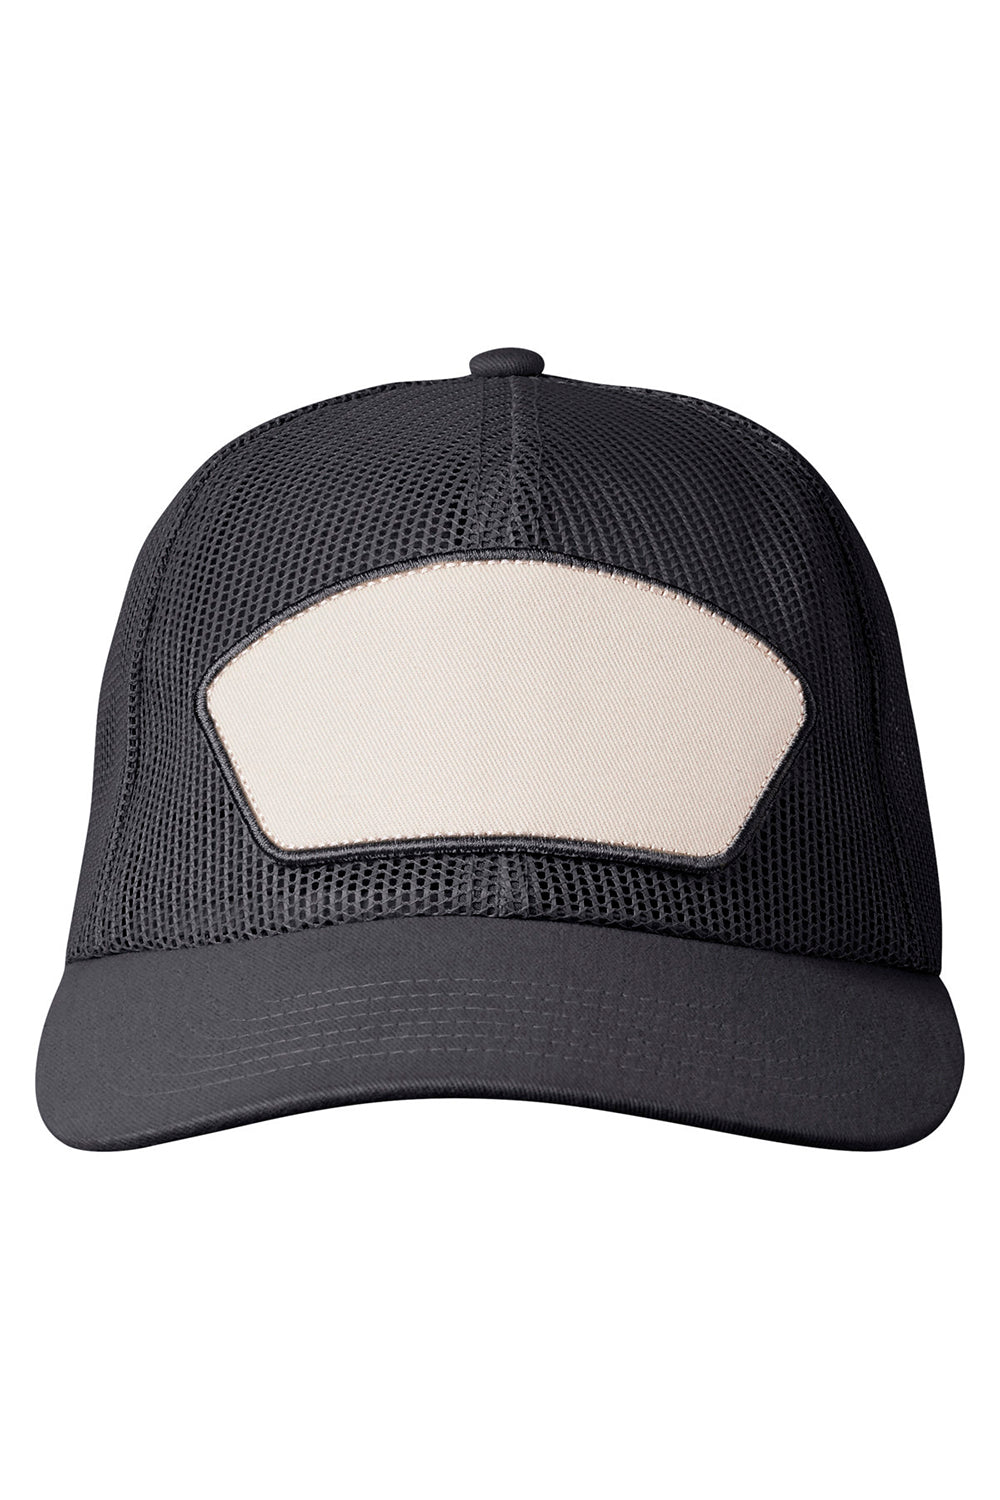 Big Accessories BA682 Mens Homestead Full Mesh Snapback Trucker Hat Black Flat Front